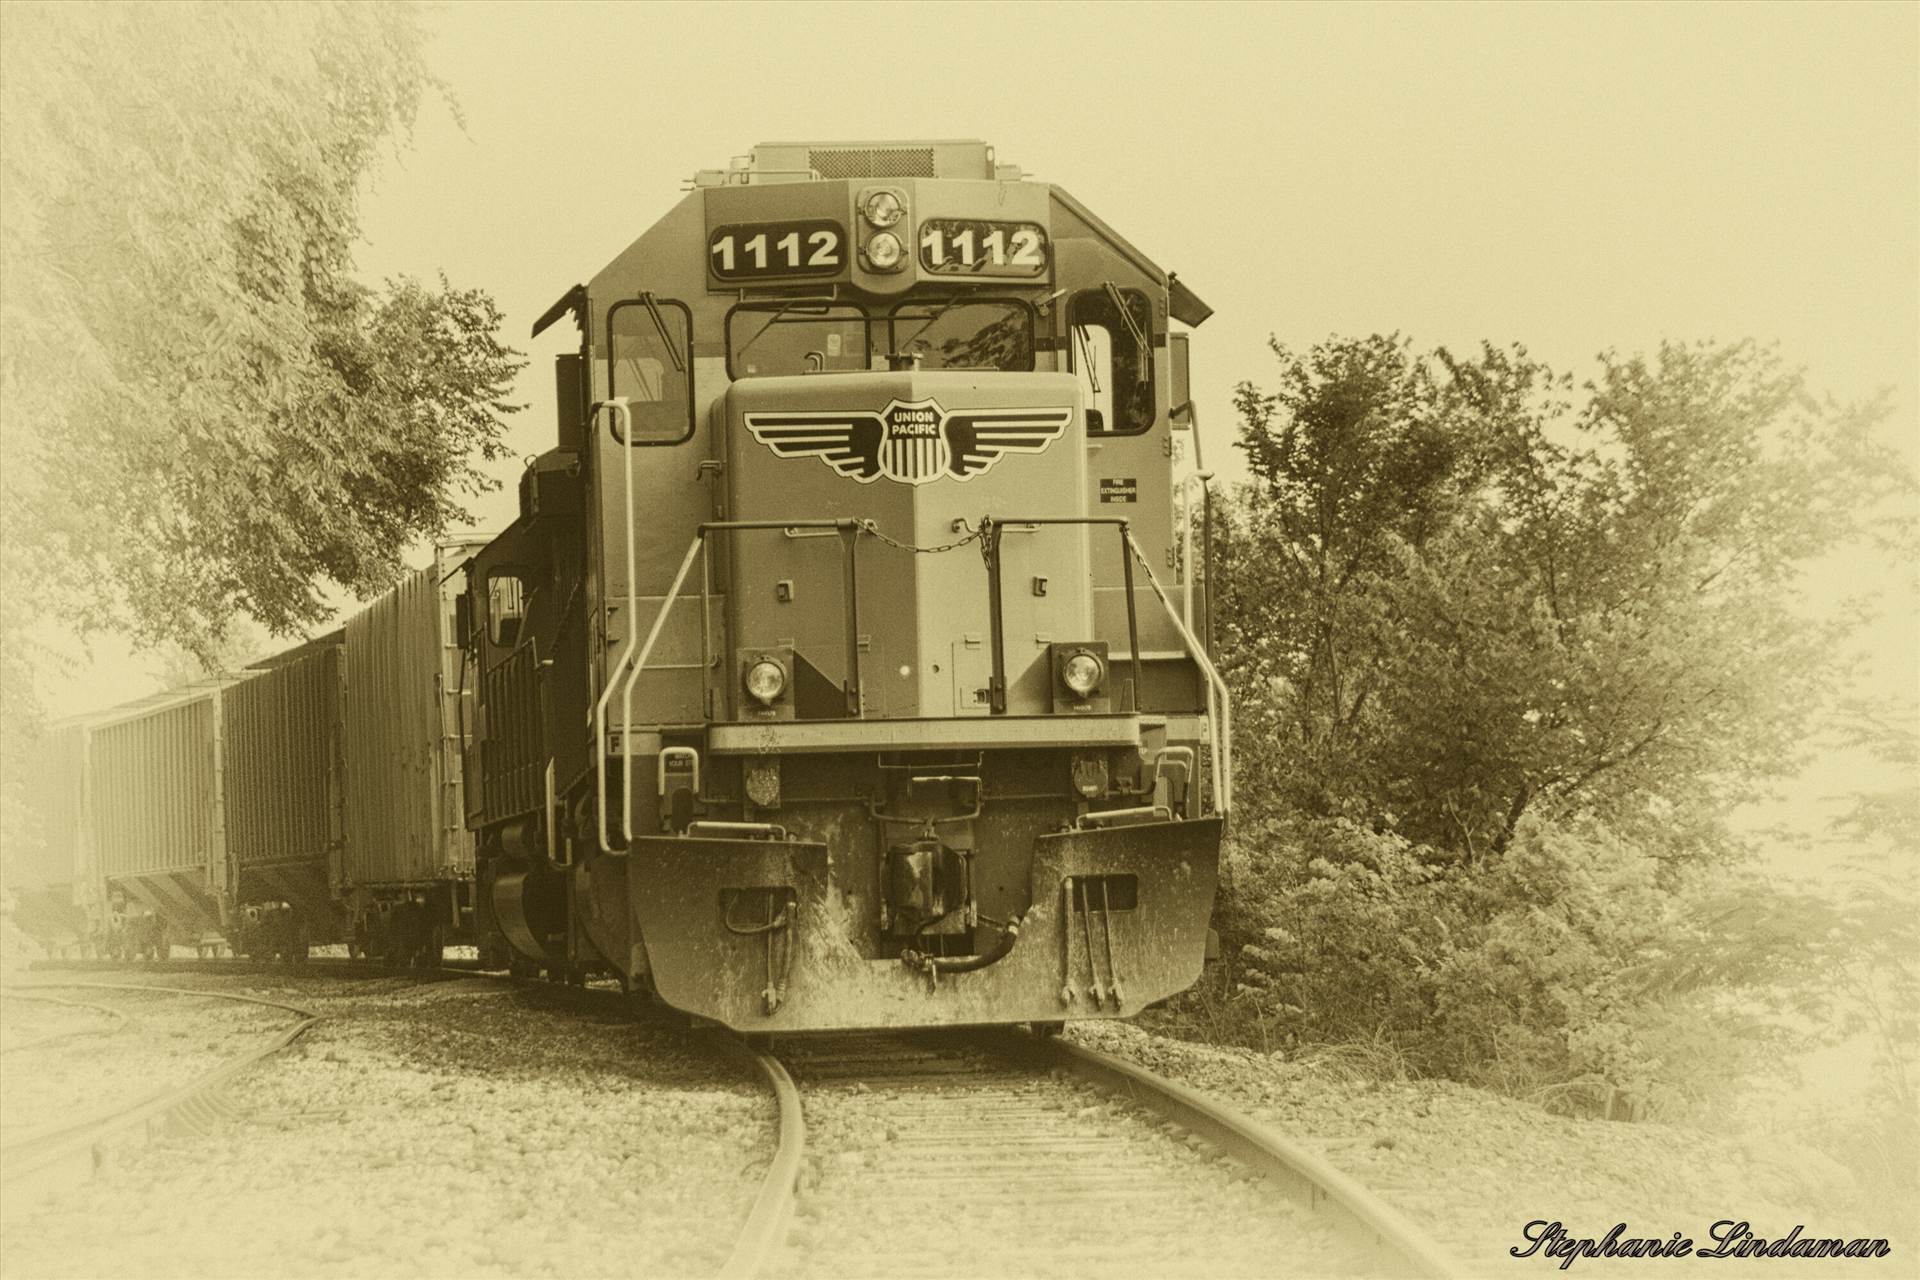 train_wm.jpg  by WPC-173